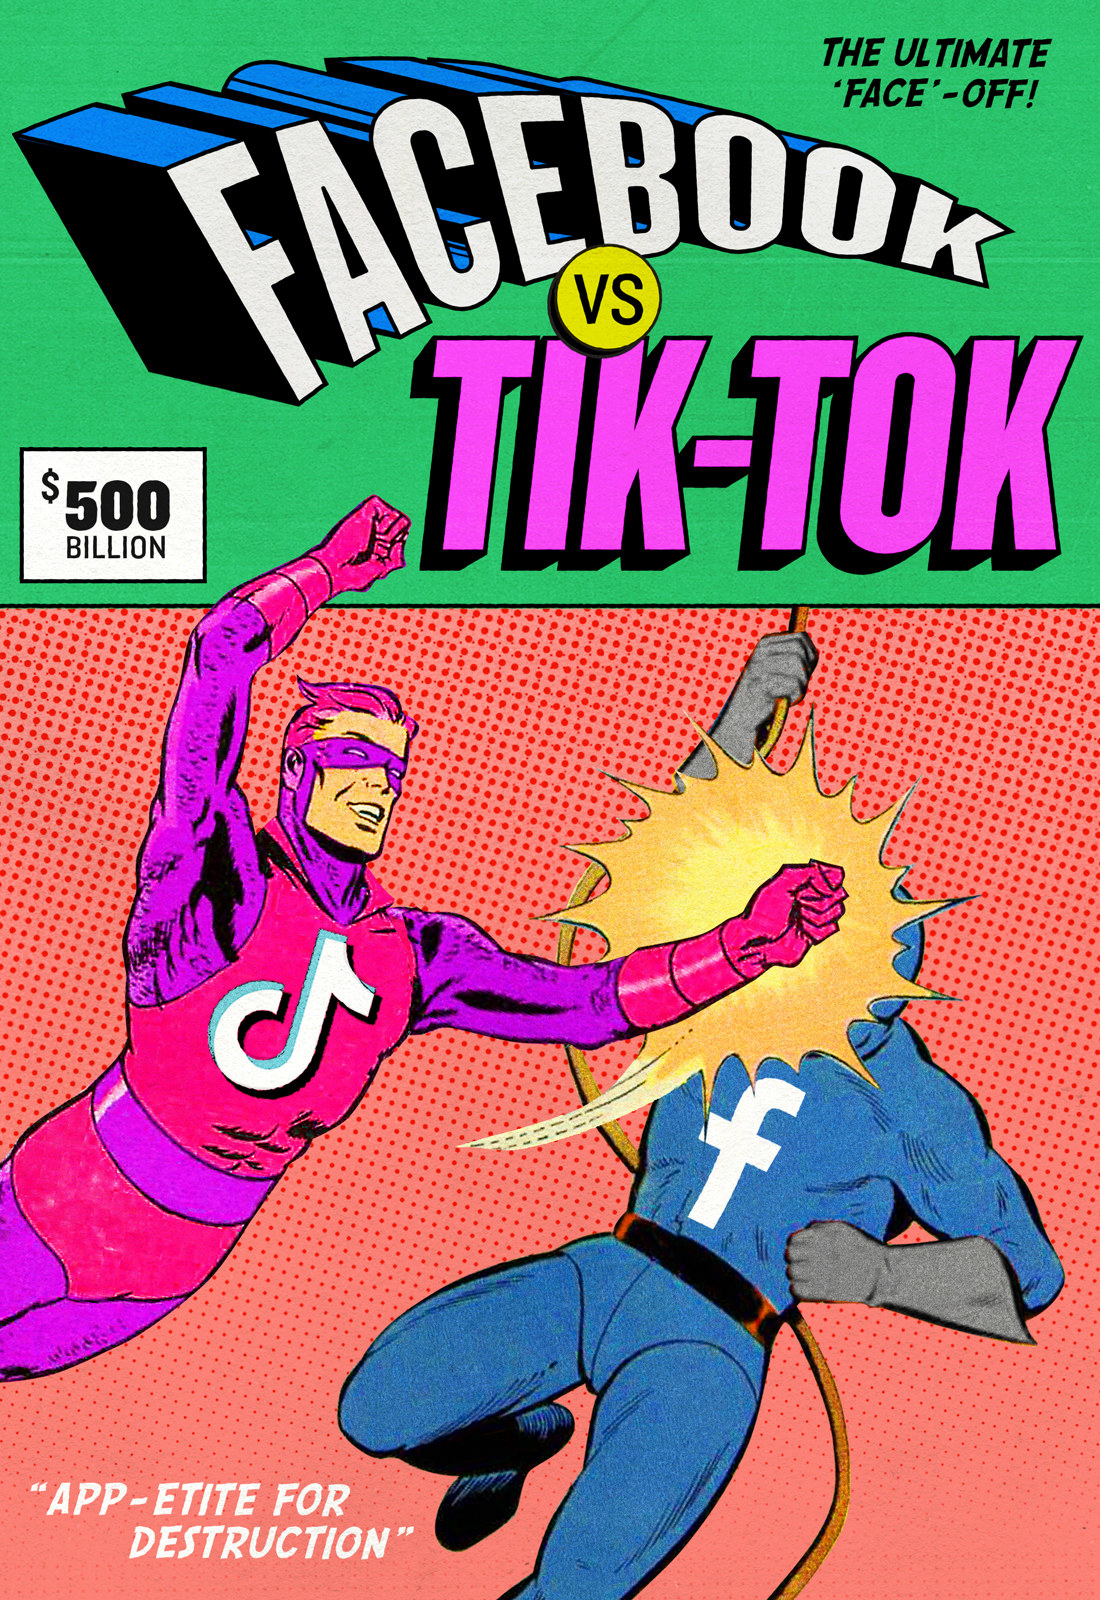 Before Mark Zuckerberg Tried To Kill TikTok, He Wanted To Own It